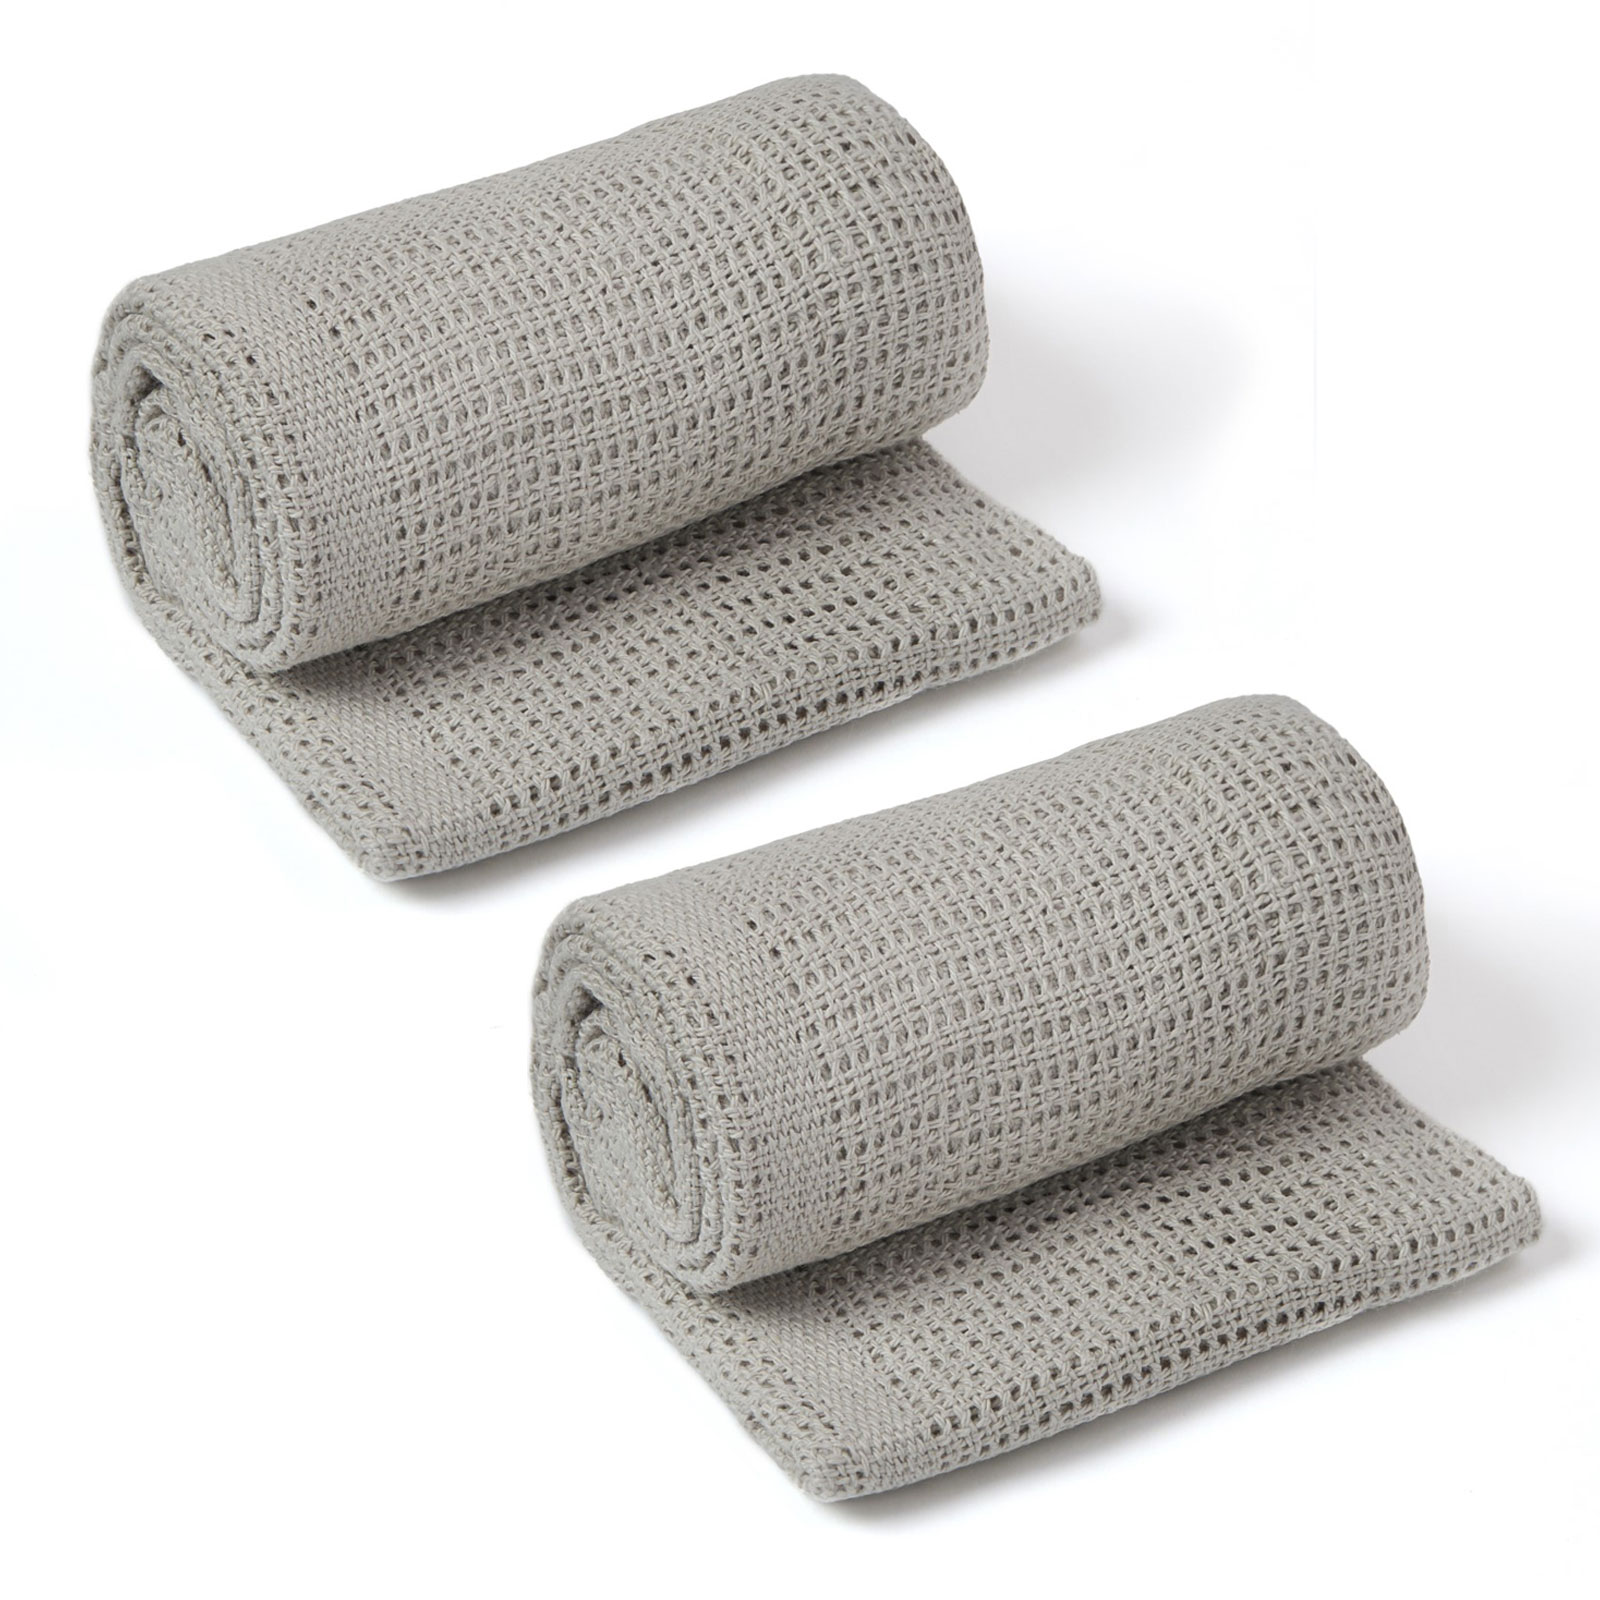 Soft Cotton Pram/Moses Basket/Crib Cellular Blanket (2 Pack) - Grey